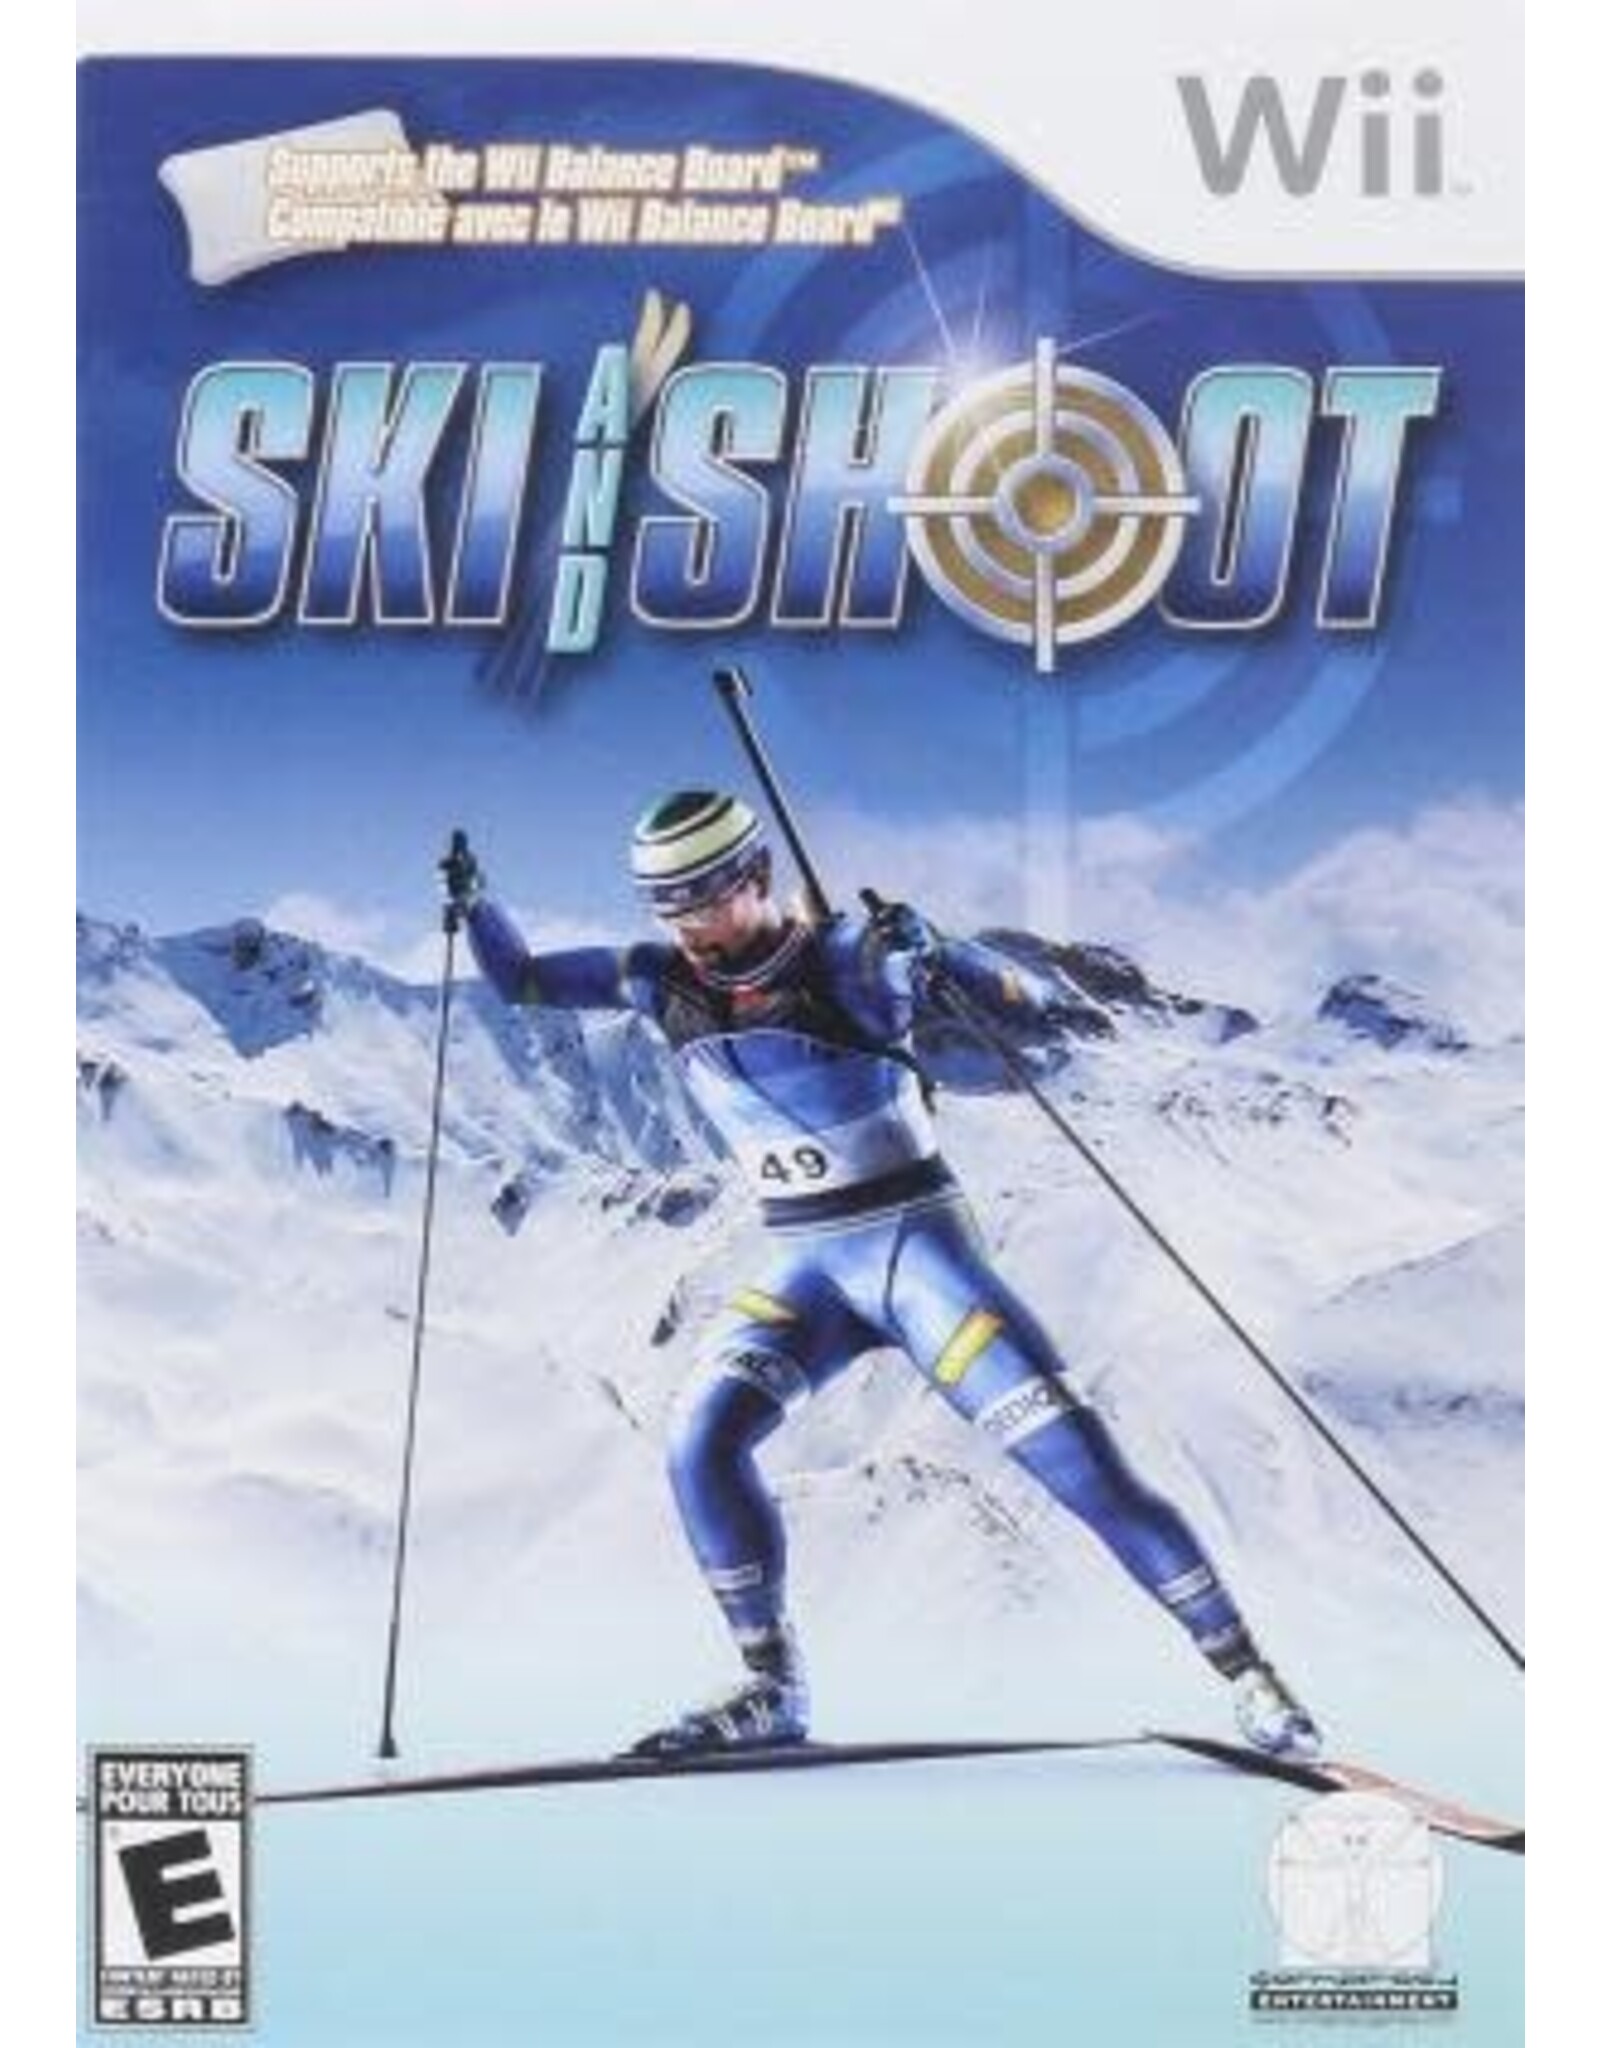 Wii Ski and Shoot (CiB)